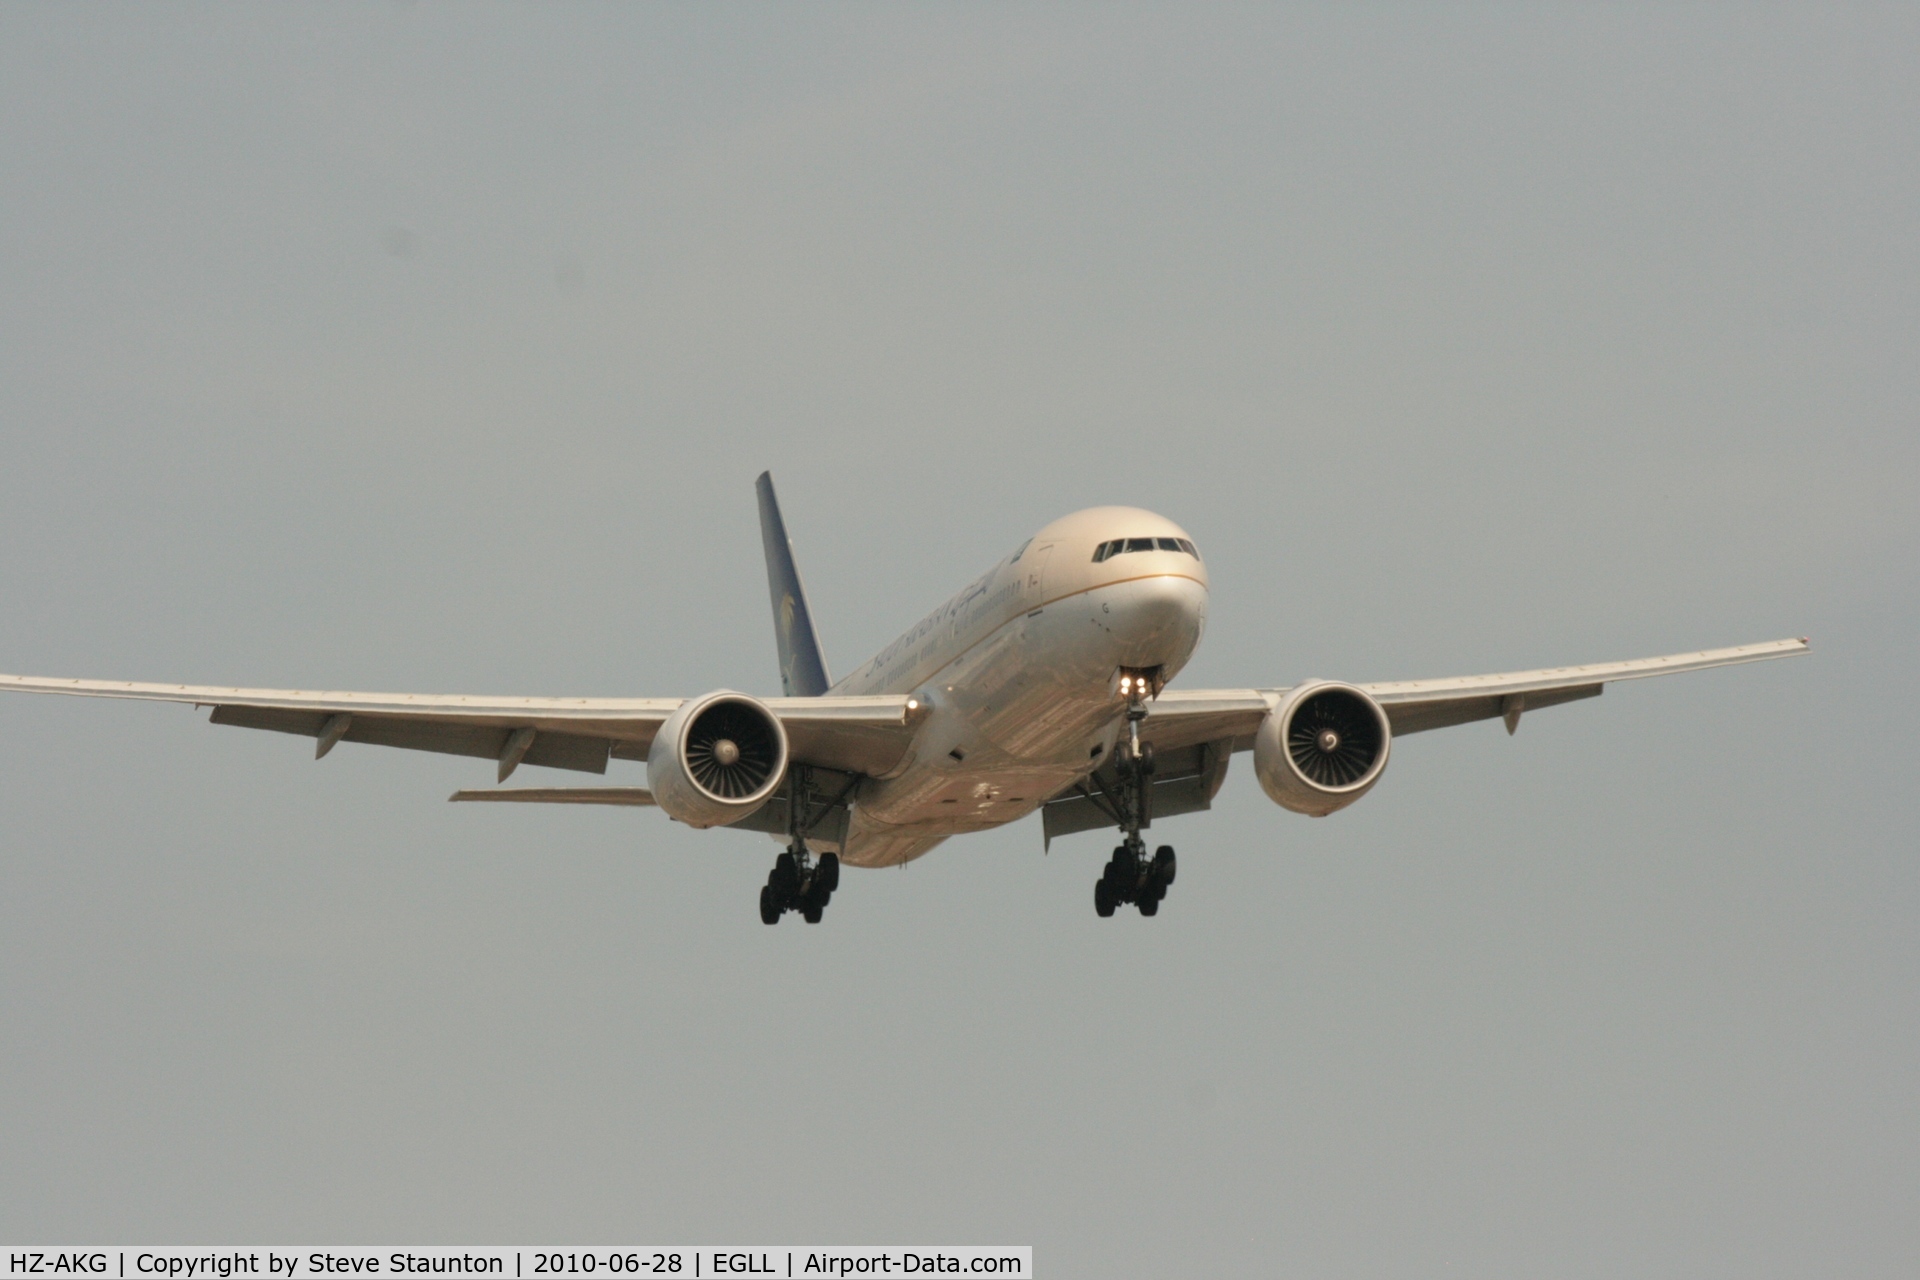 HZ-AKG, 1998 Boeing 777-268/ER C/N 28350, Taken at Heathrow Airport, June 2010